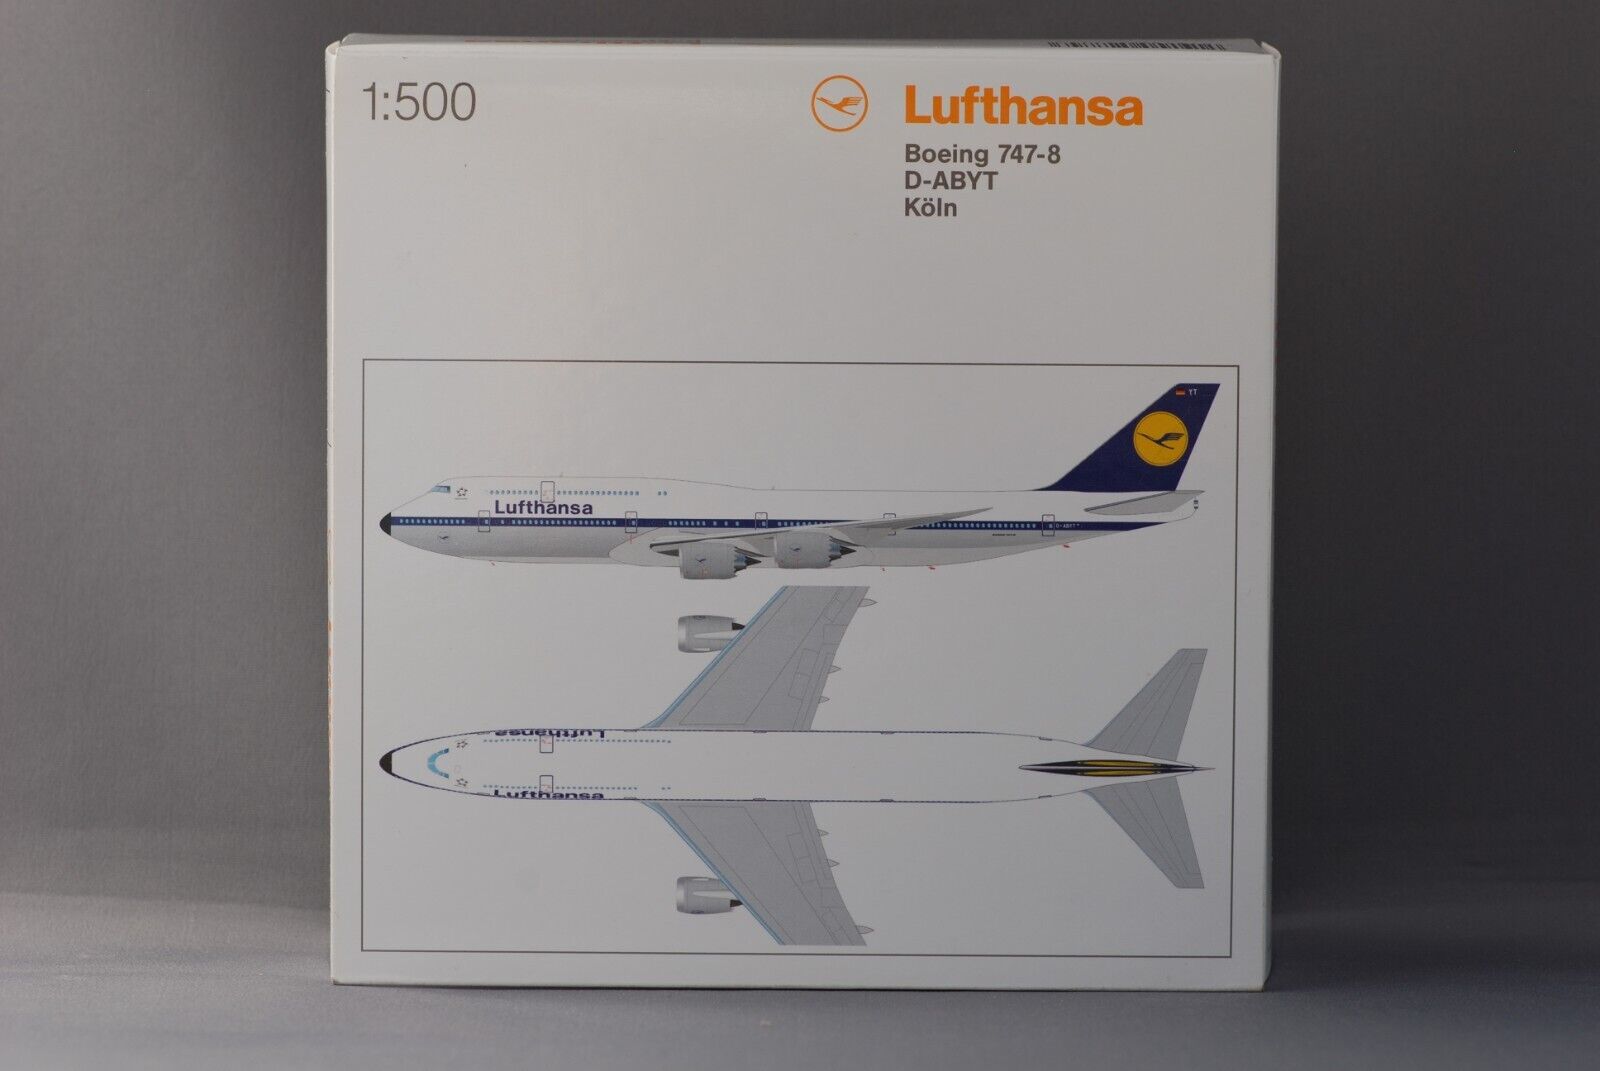 Lufthansa B747-8 retro livery, Herpa Wings 527743, 1:500, D-ABYT Köln